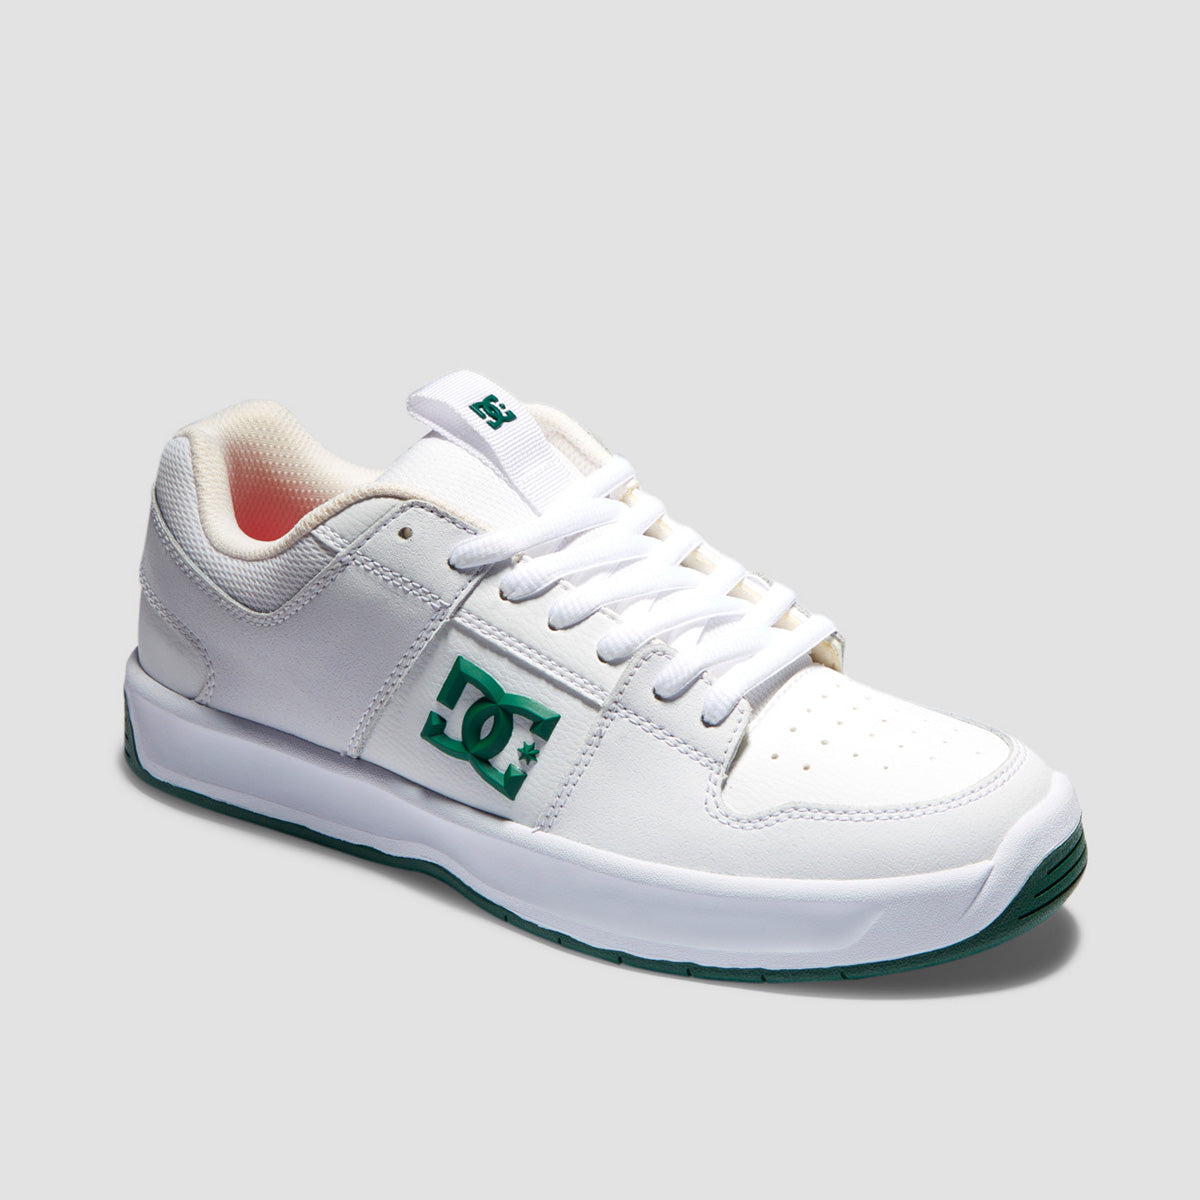 DC Lynx Zero S Shoes - White/Green